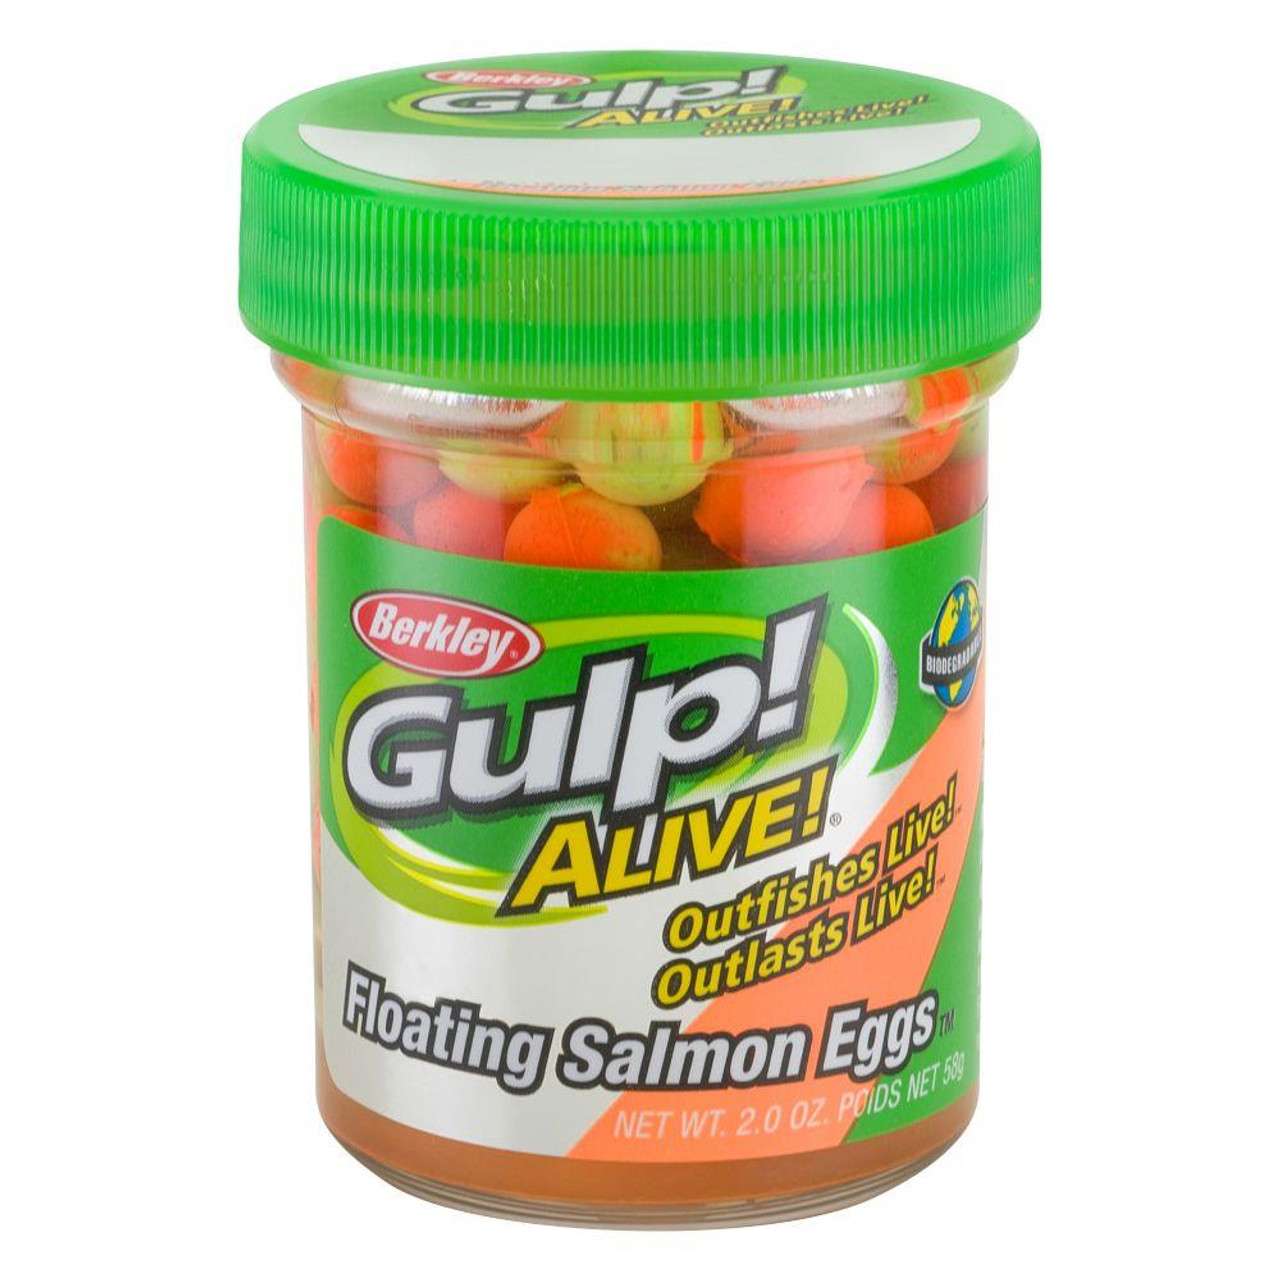 Berkley Gulp! Alive! Floating Salmon Eggs